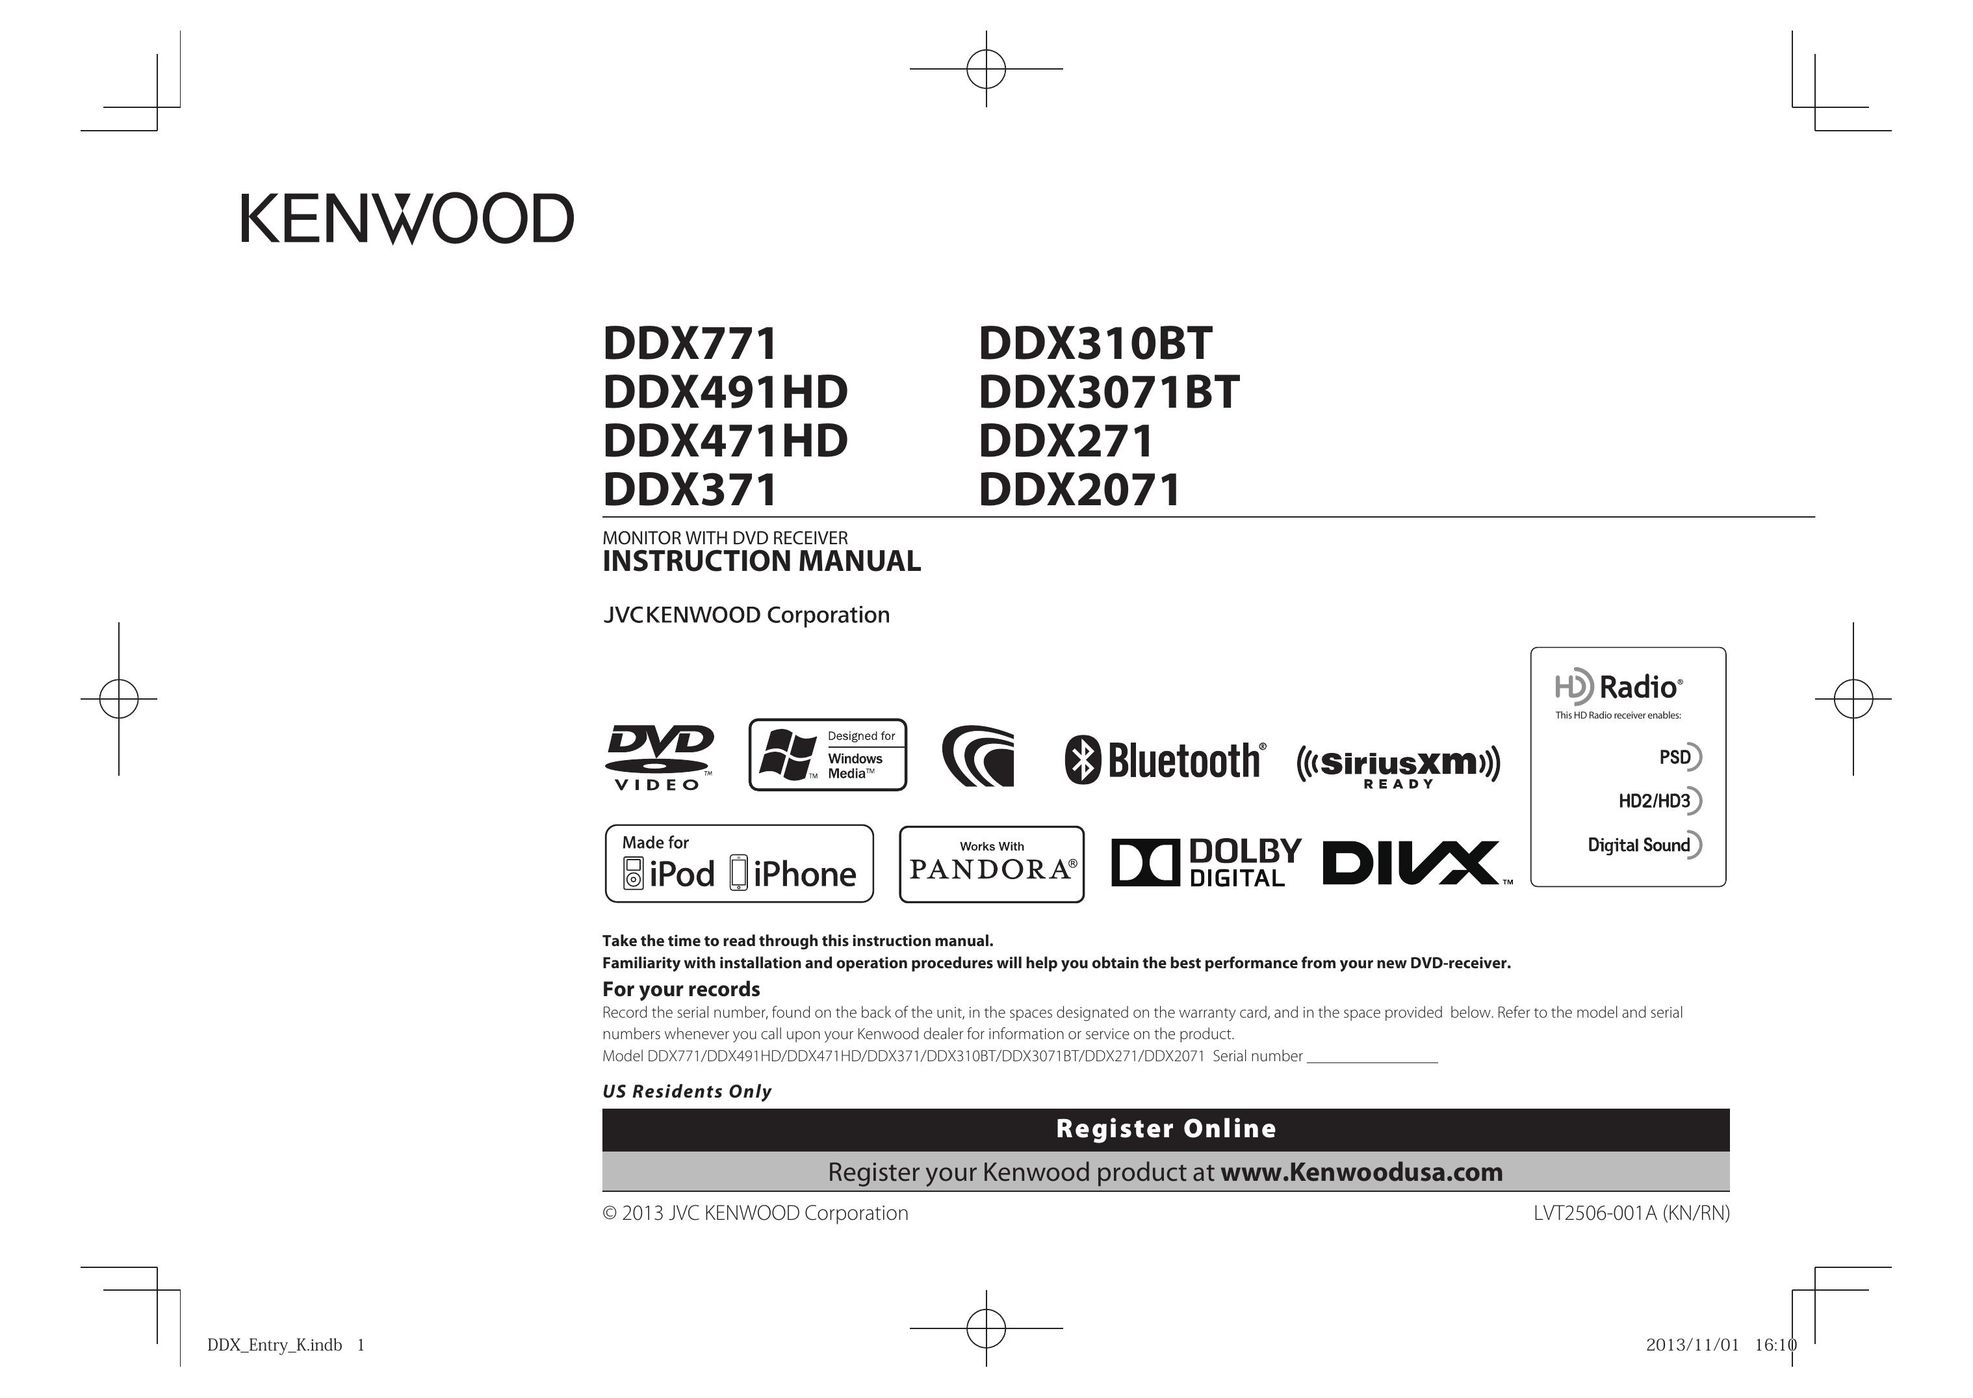 Kenwood DDX371 Car Video System User Manual